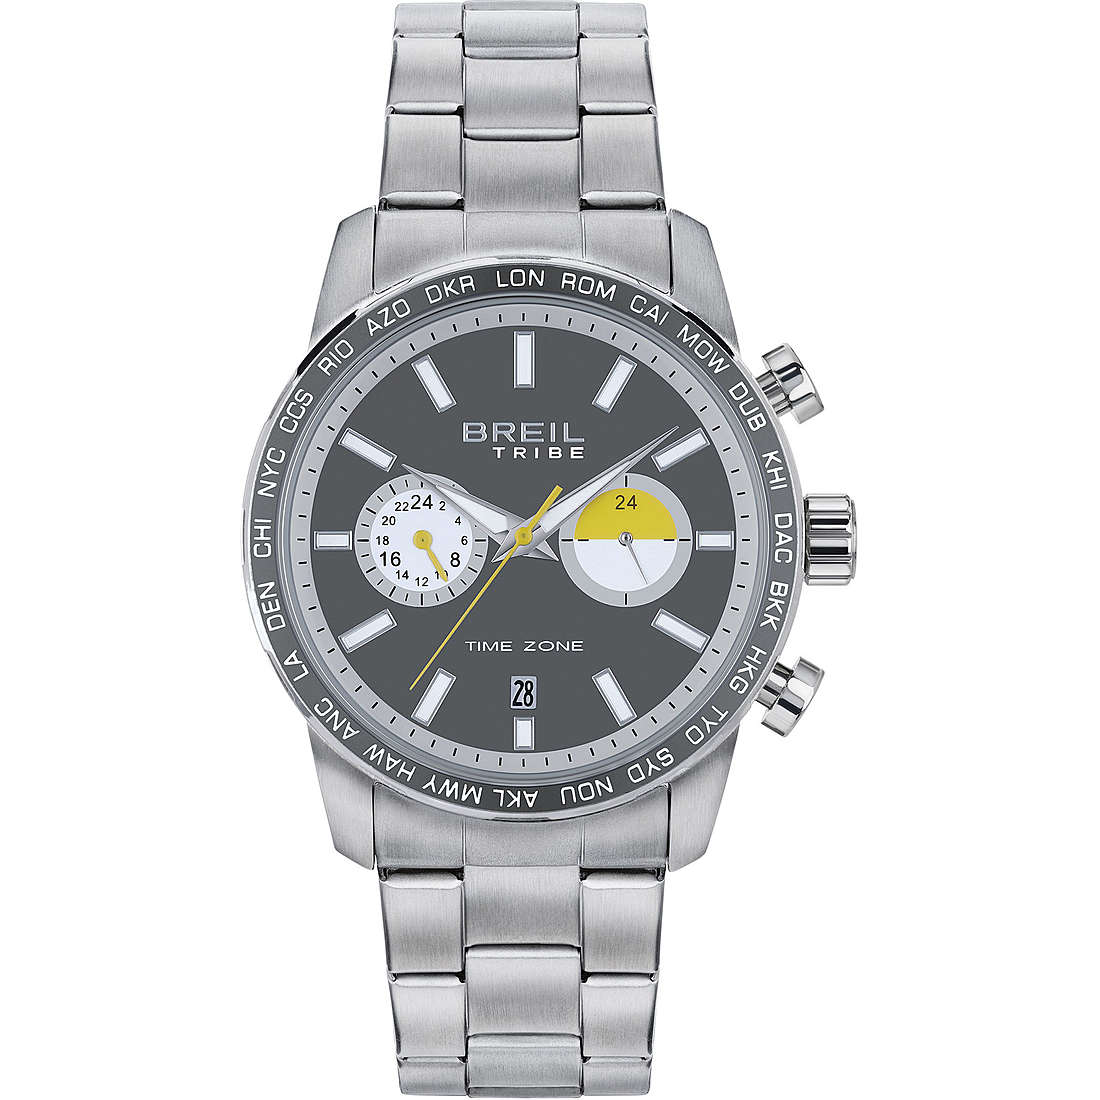 Multifunktions Uhr Uhr Stahl zifferblatt Grau mann EW0566